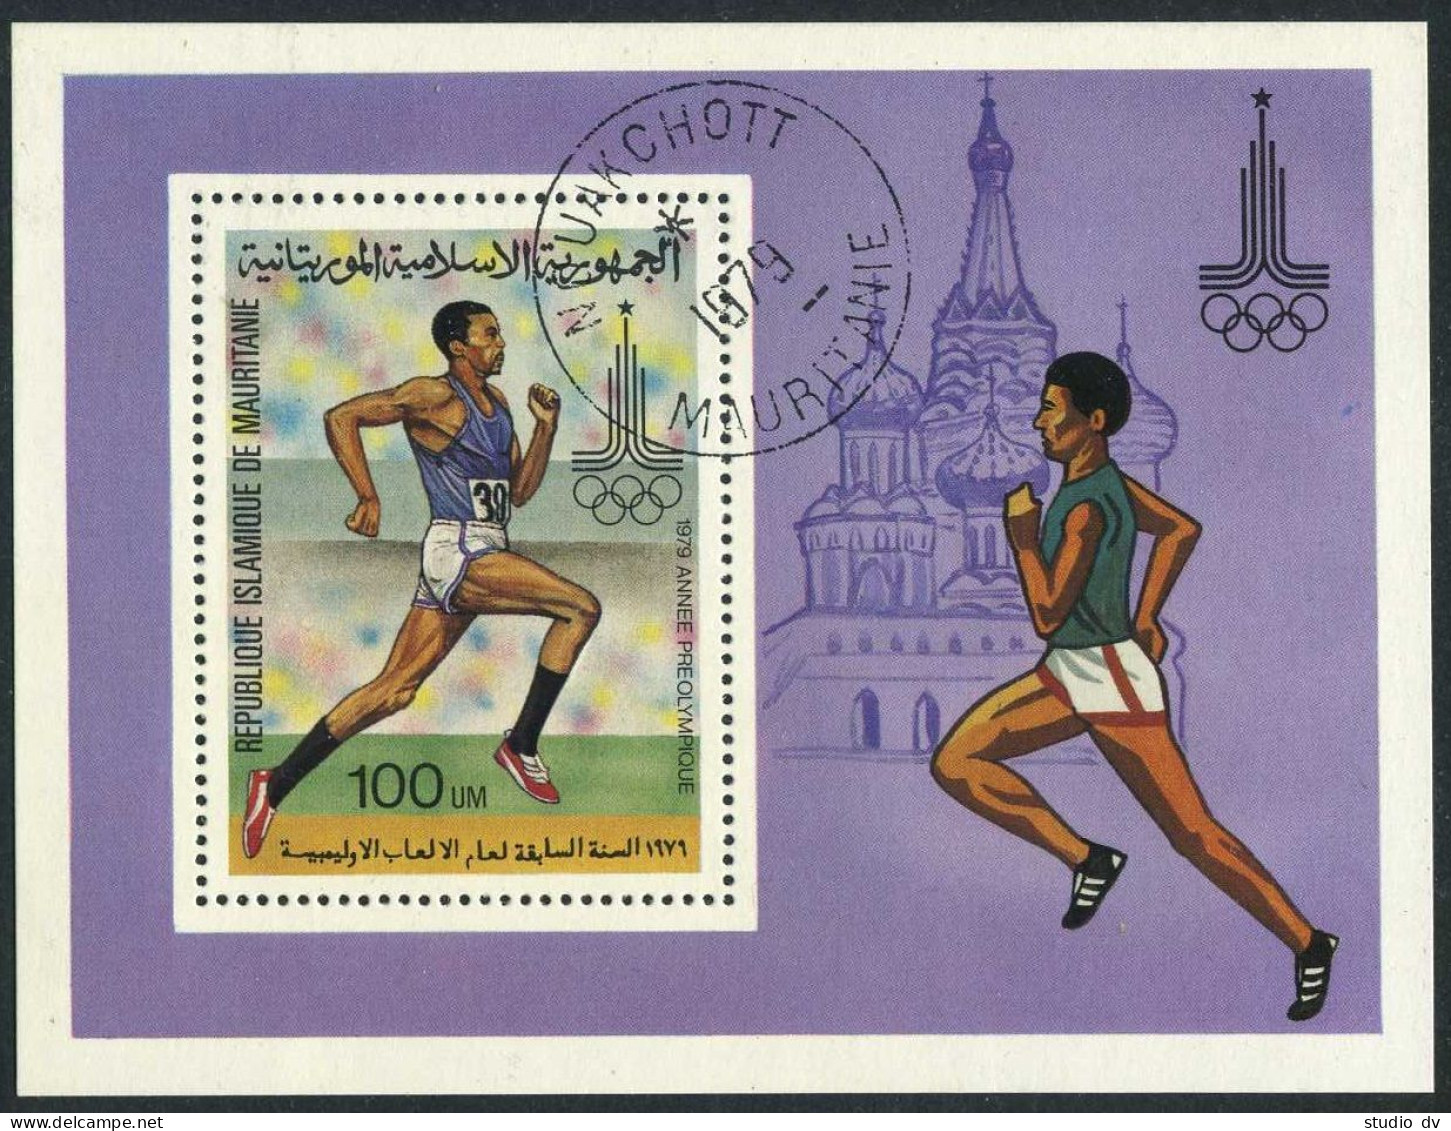 Mauritania 431, CTO. Michel 656 Bl.26. Olympics Moscow-1980. Running. - Mauritania (1960-...)